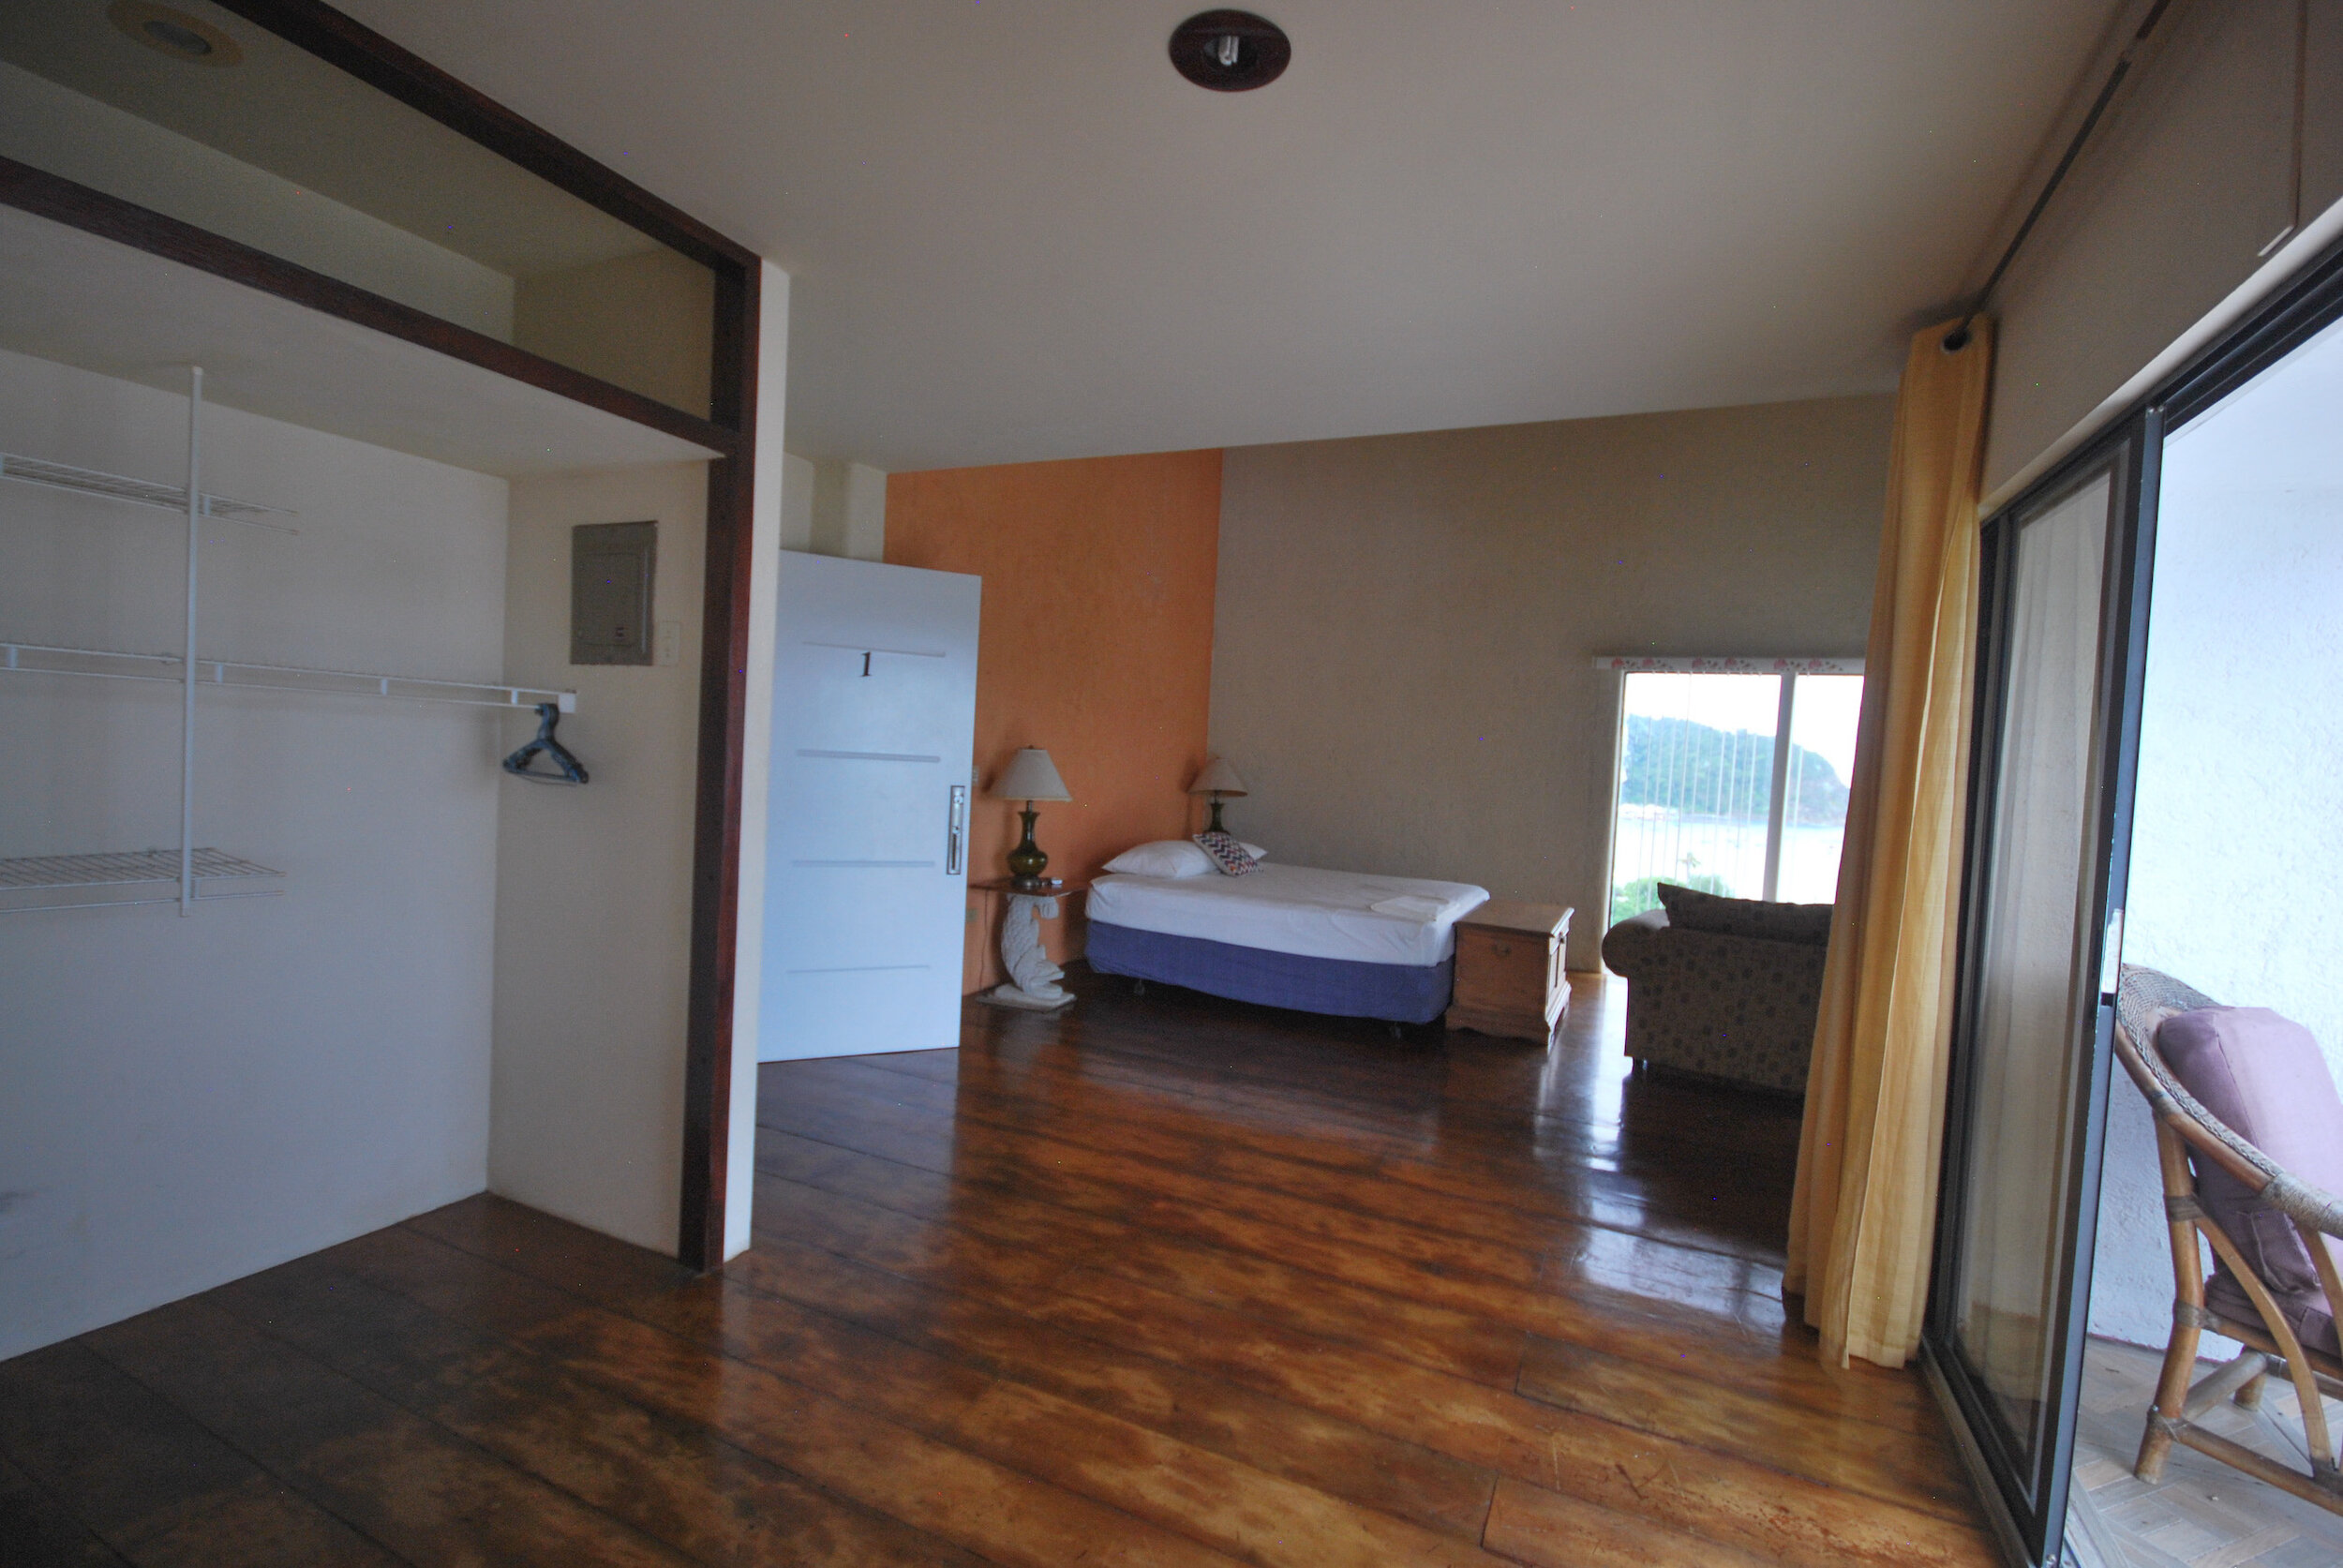 Hotel Resort For Sale San Juan Del Sur Nicaragua 21.JPEG